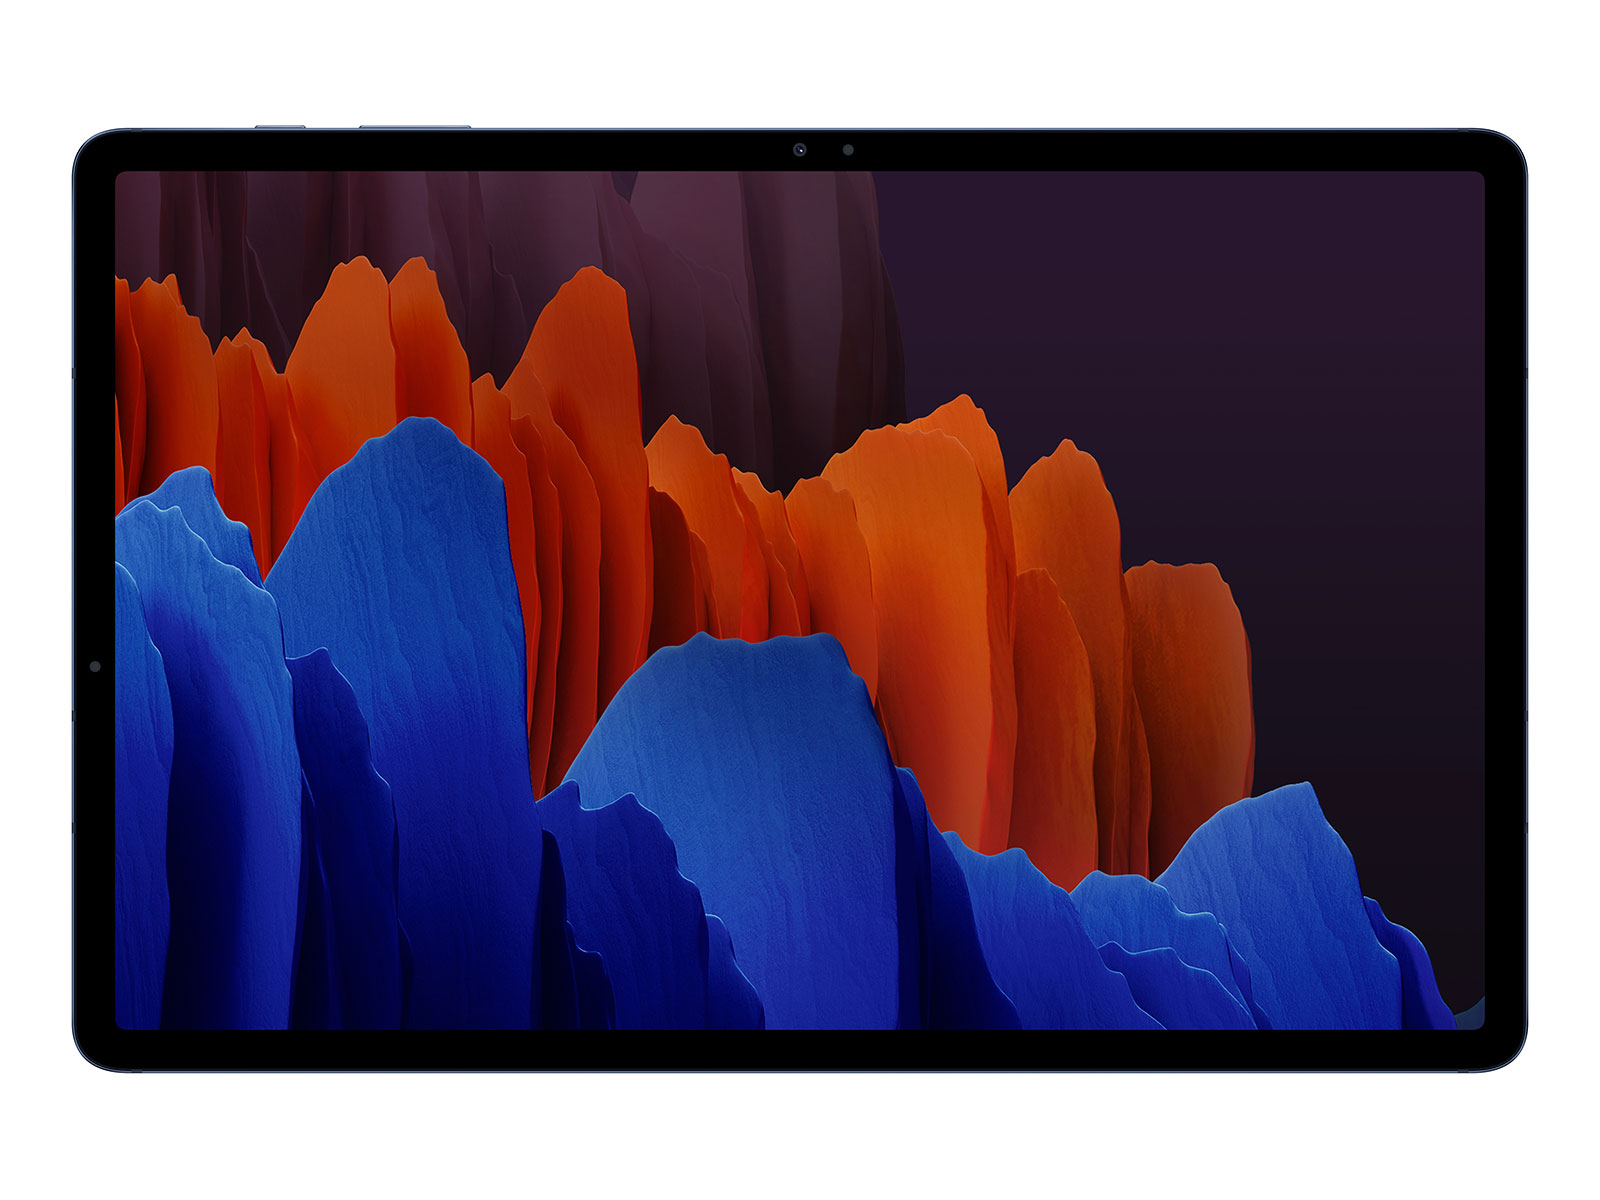 Galaxy Tab S7+, 256GB, Mystic Navy Tablets - SM-T970NDBEXAR 